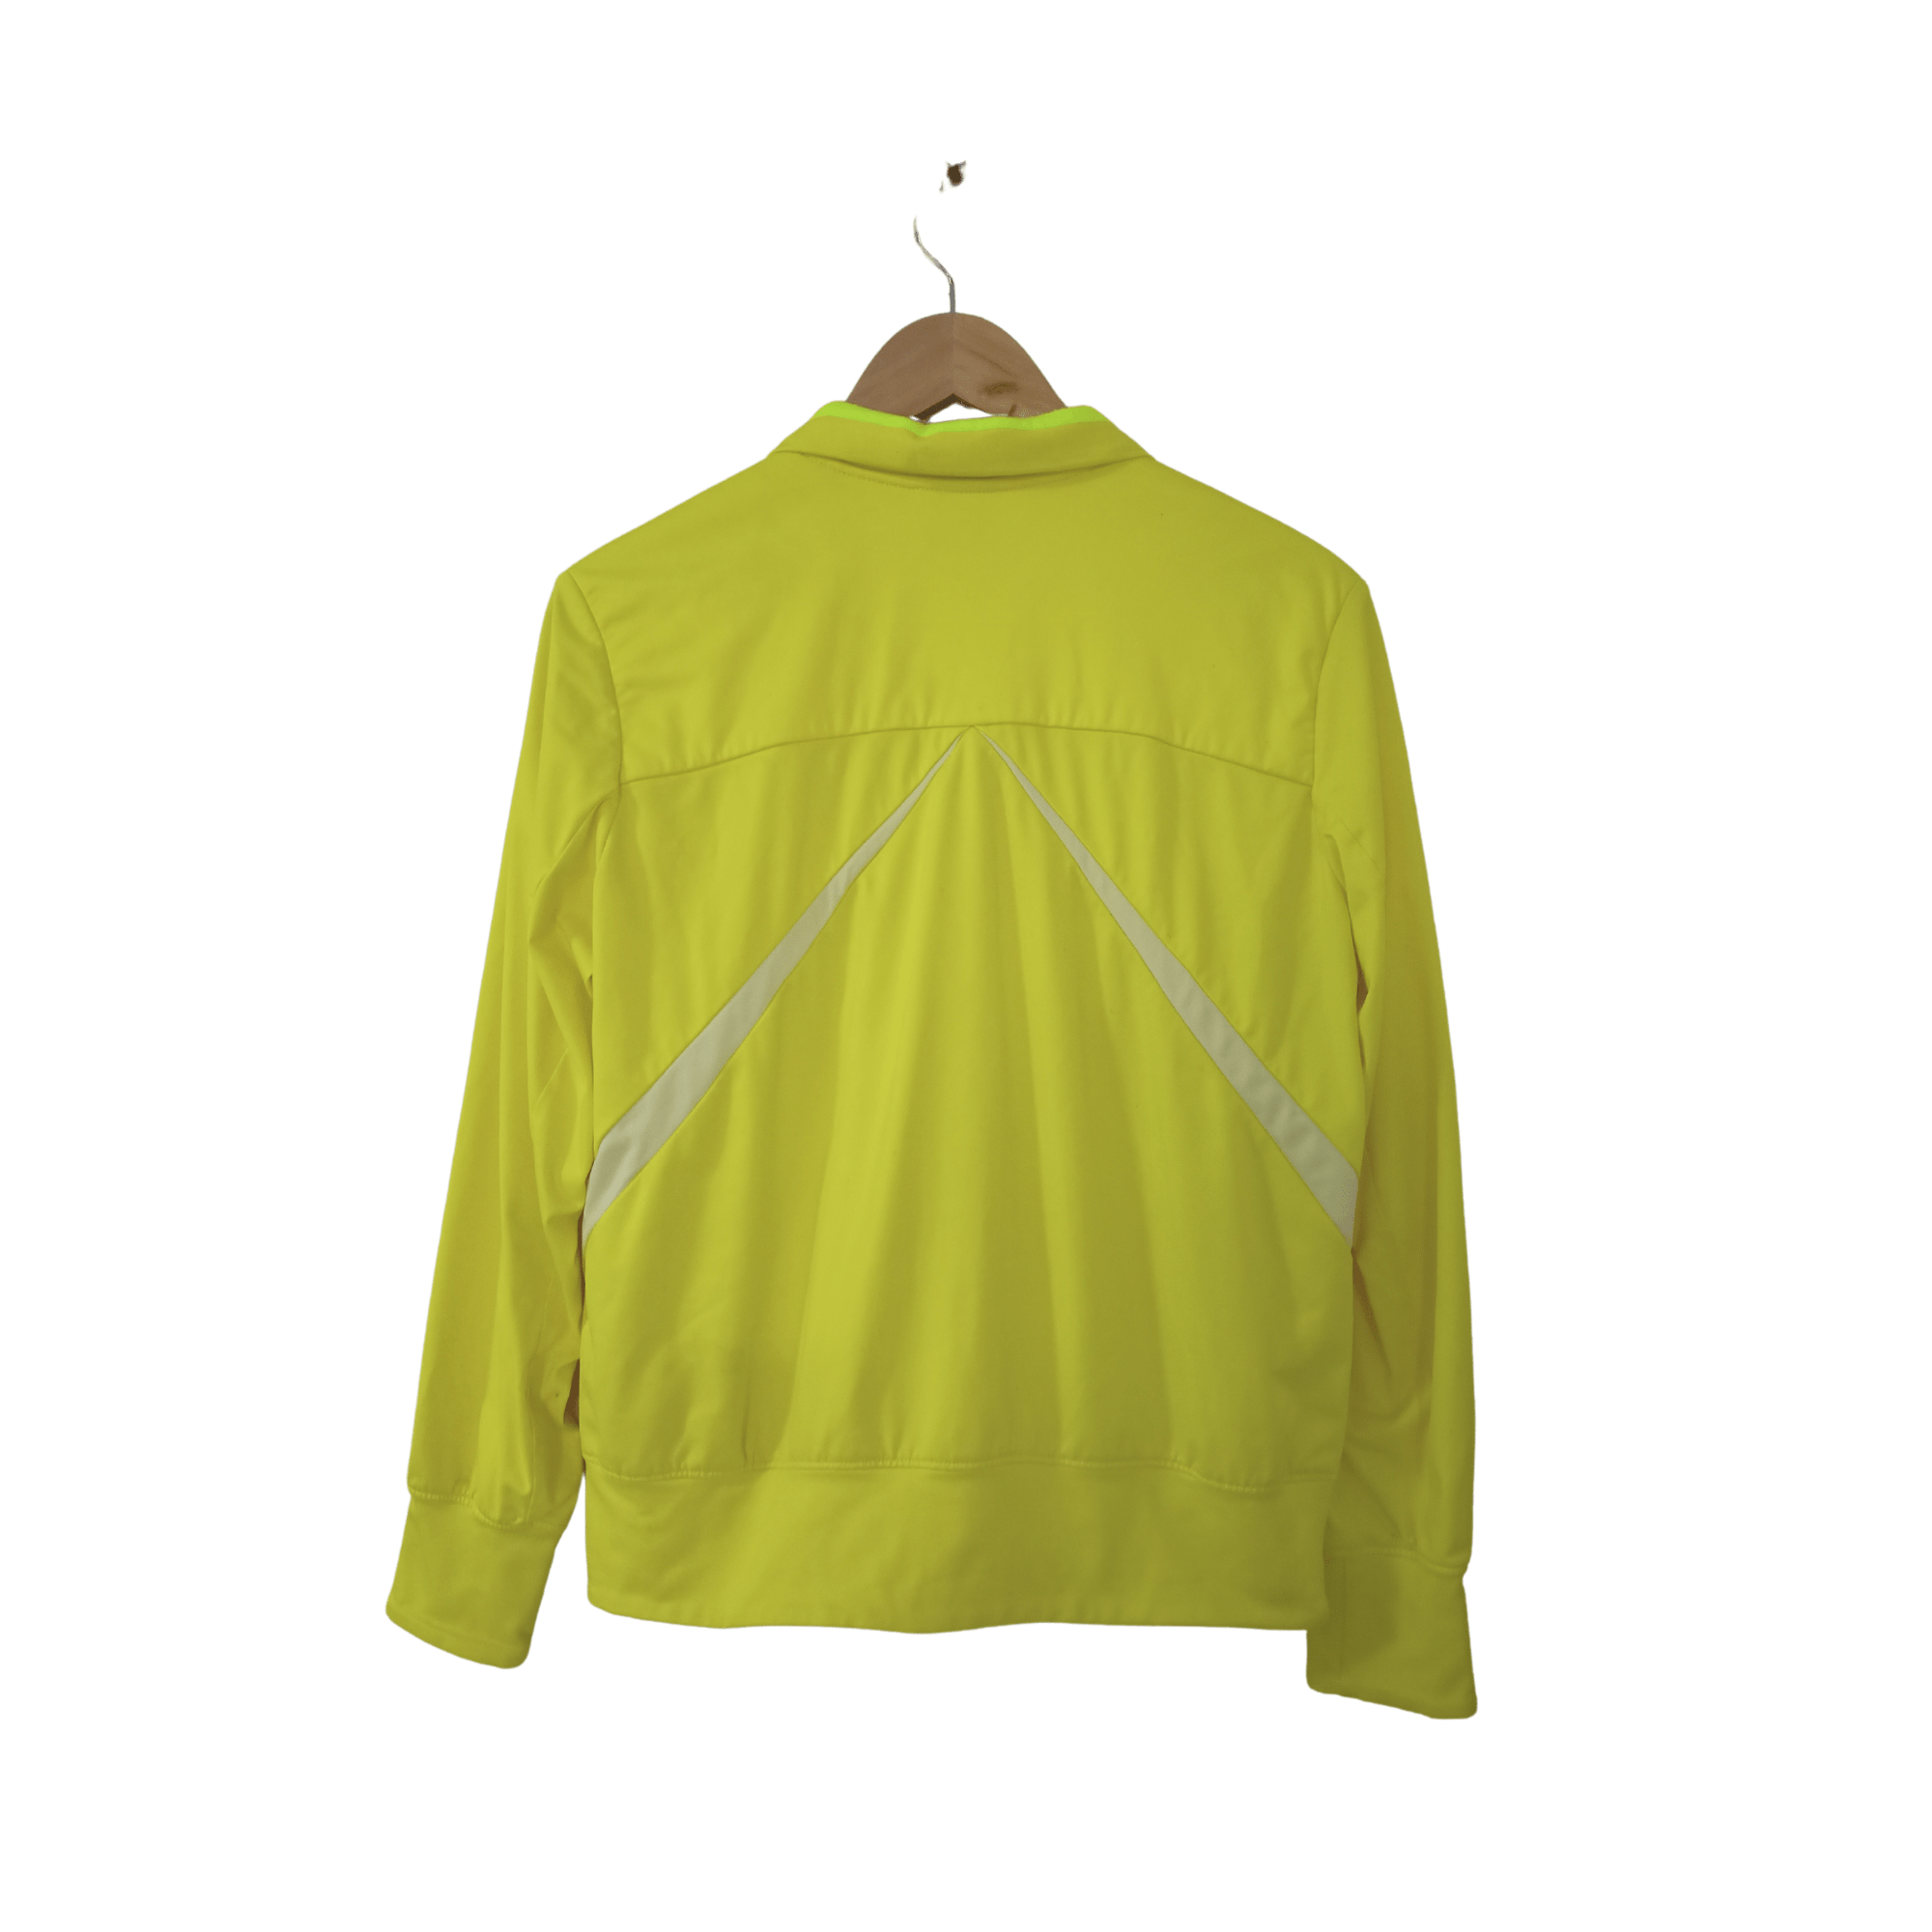 Nike Dri-fit Small Swoosh Embroidery Yellow Neon Jacket - 2